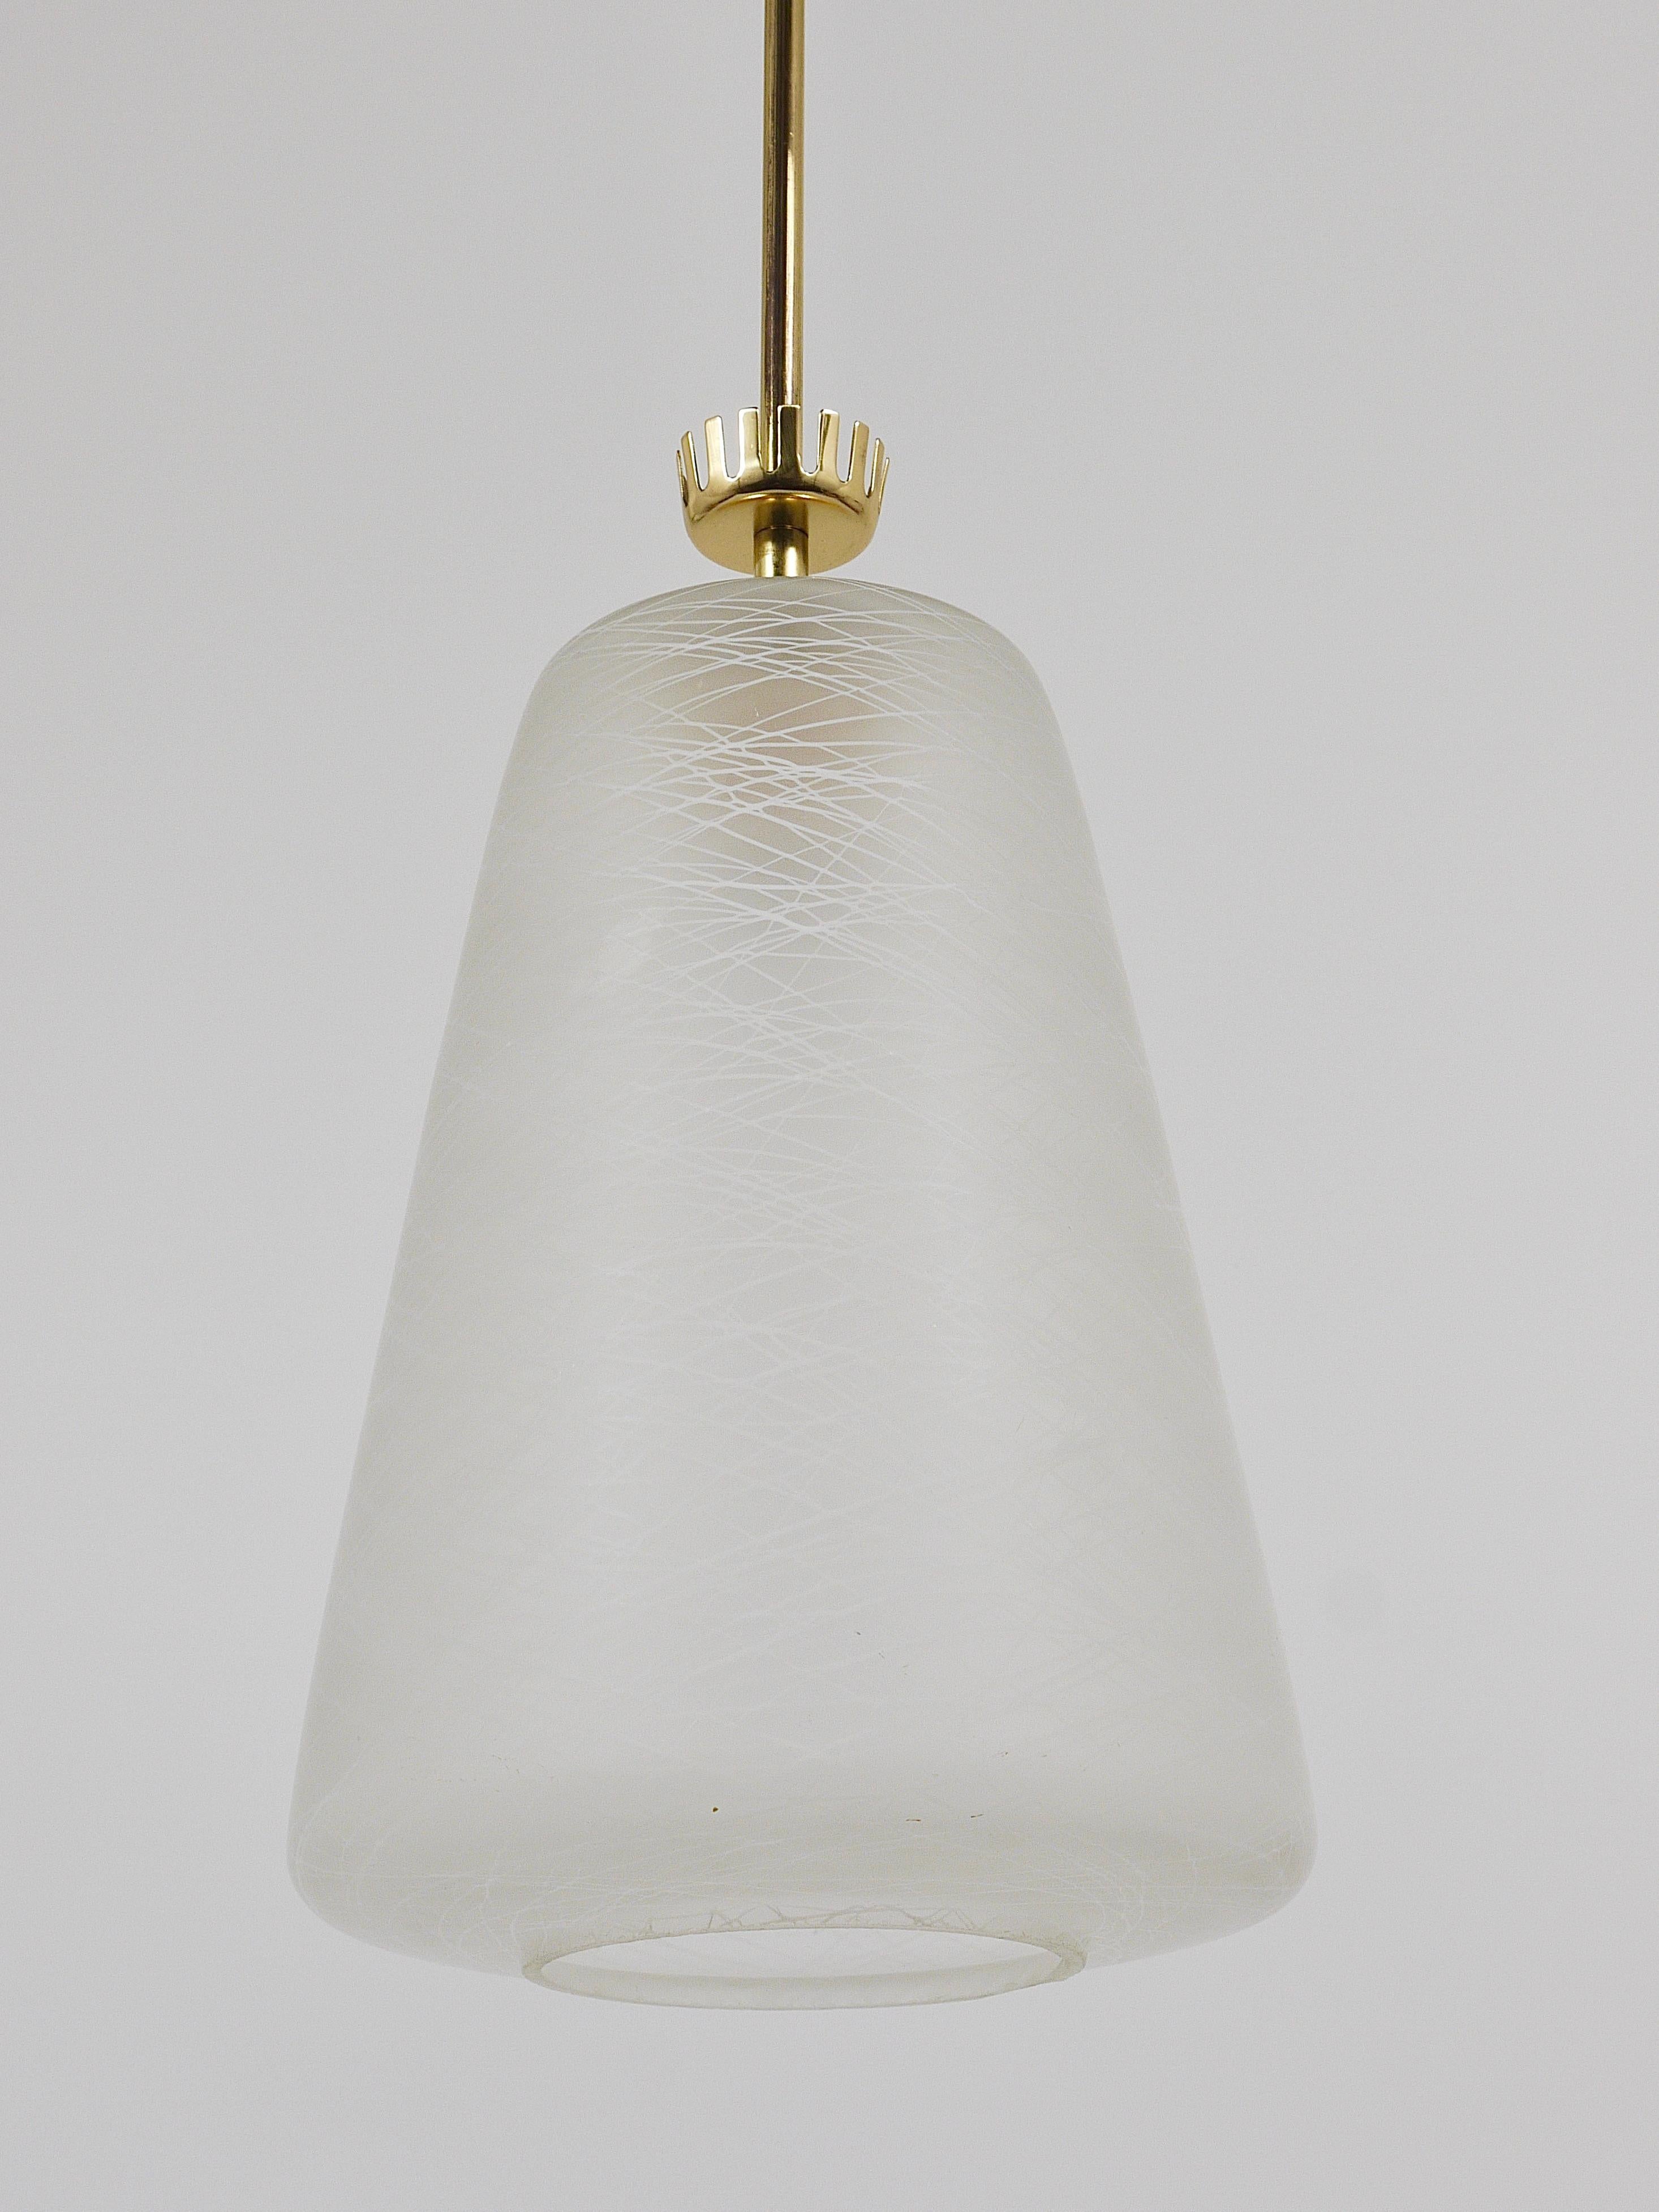 Gio Ponti Style Mid-Century Brass Crown Pendant Lamp Lantern, Italy, 1950s For Sale 10